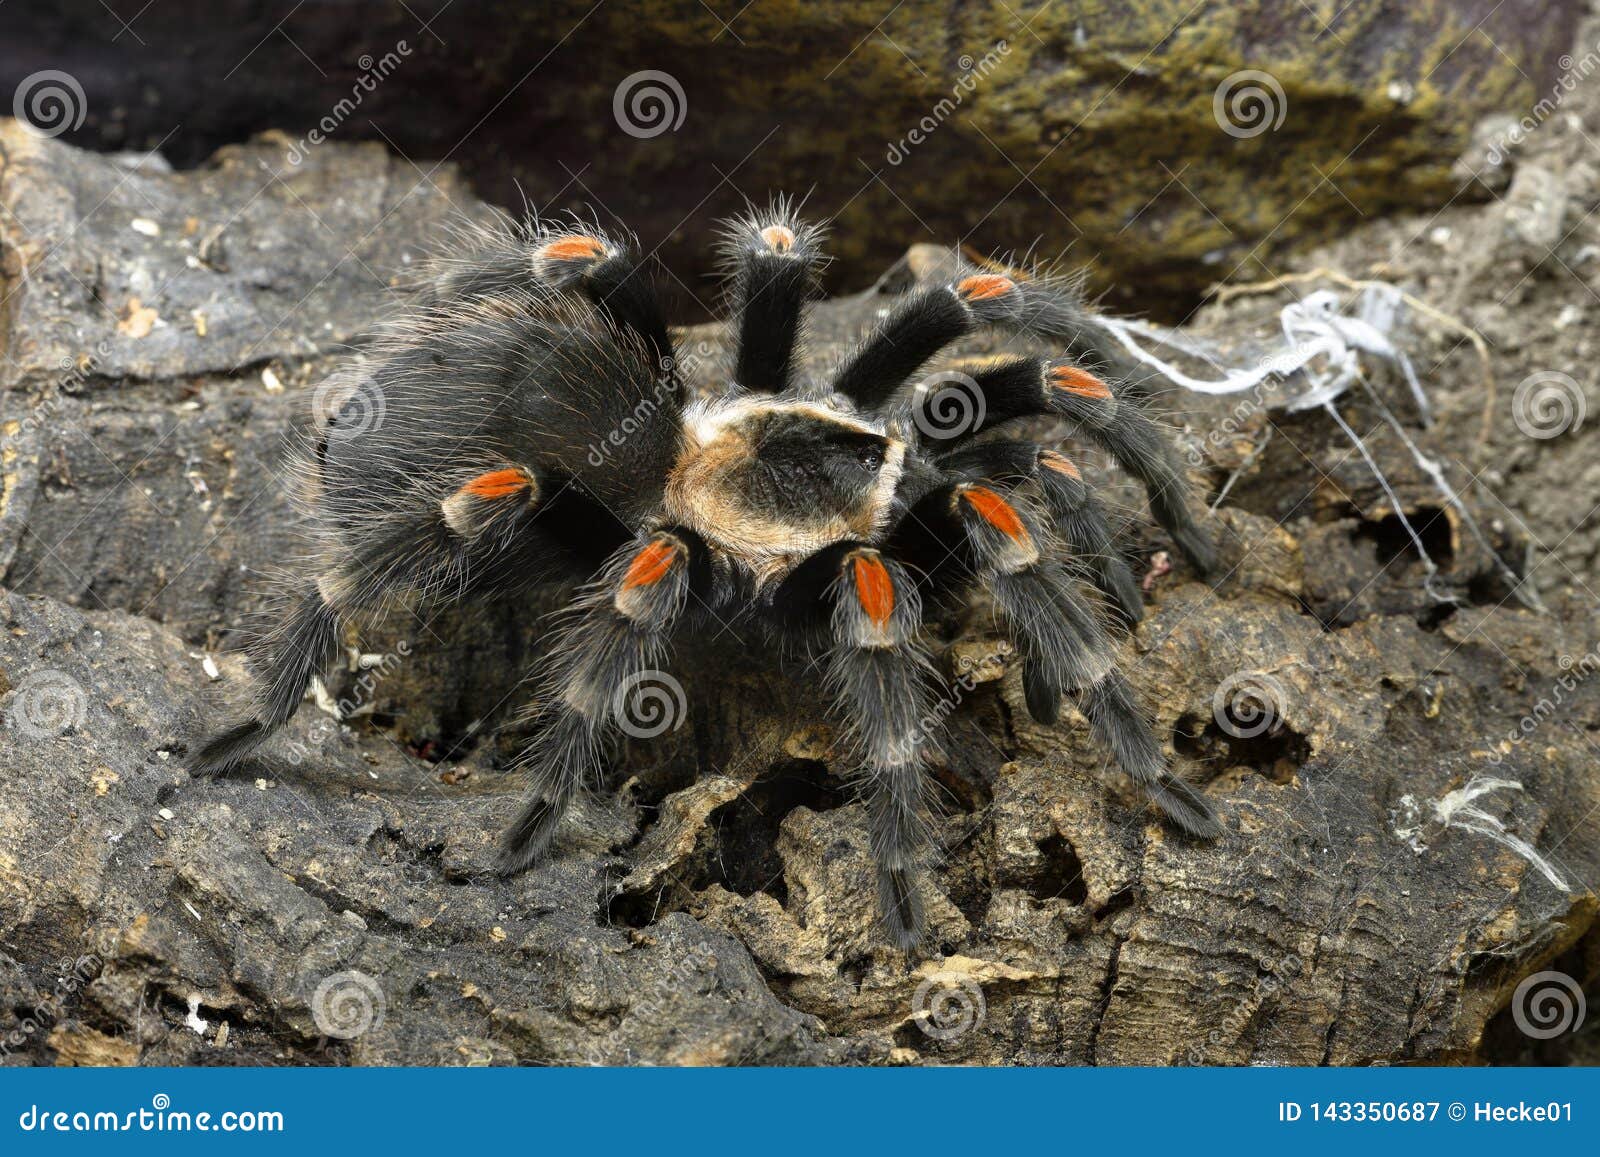 Red-knee tarantula stock image. Image of spider, creature - 143350687